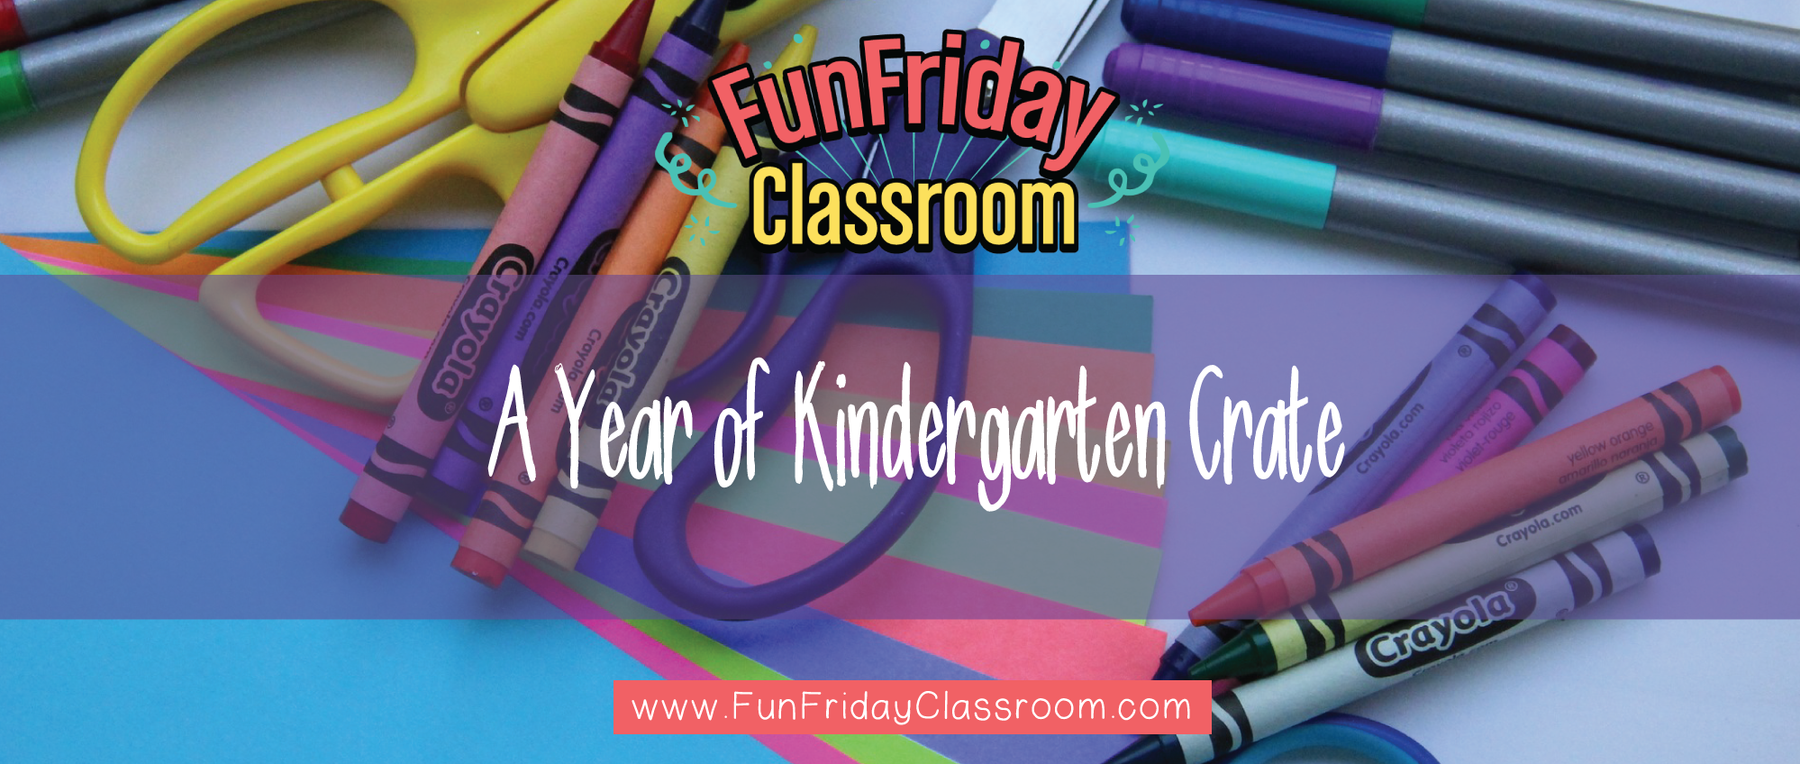 A Year Of Kindergarten Crate